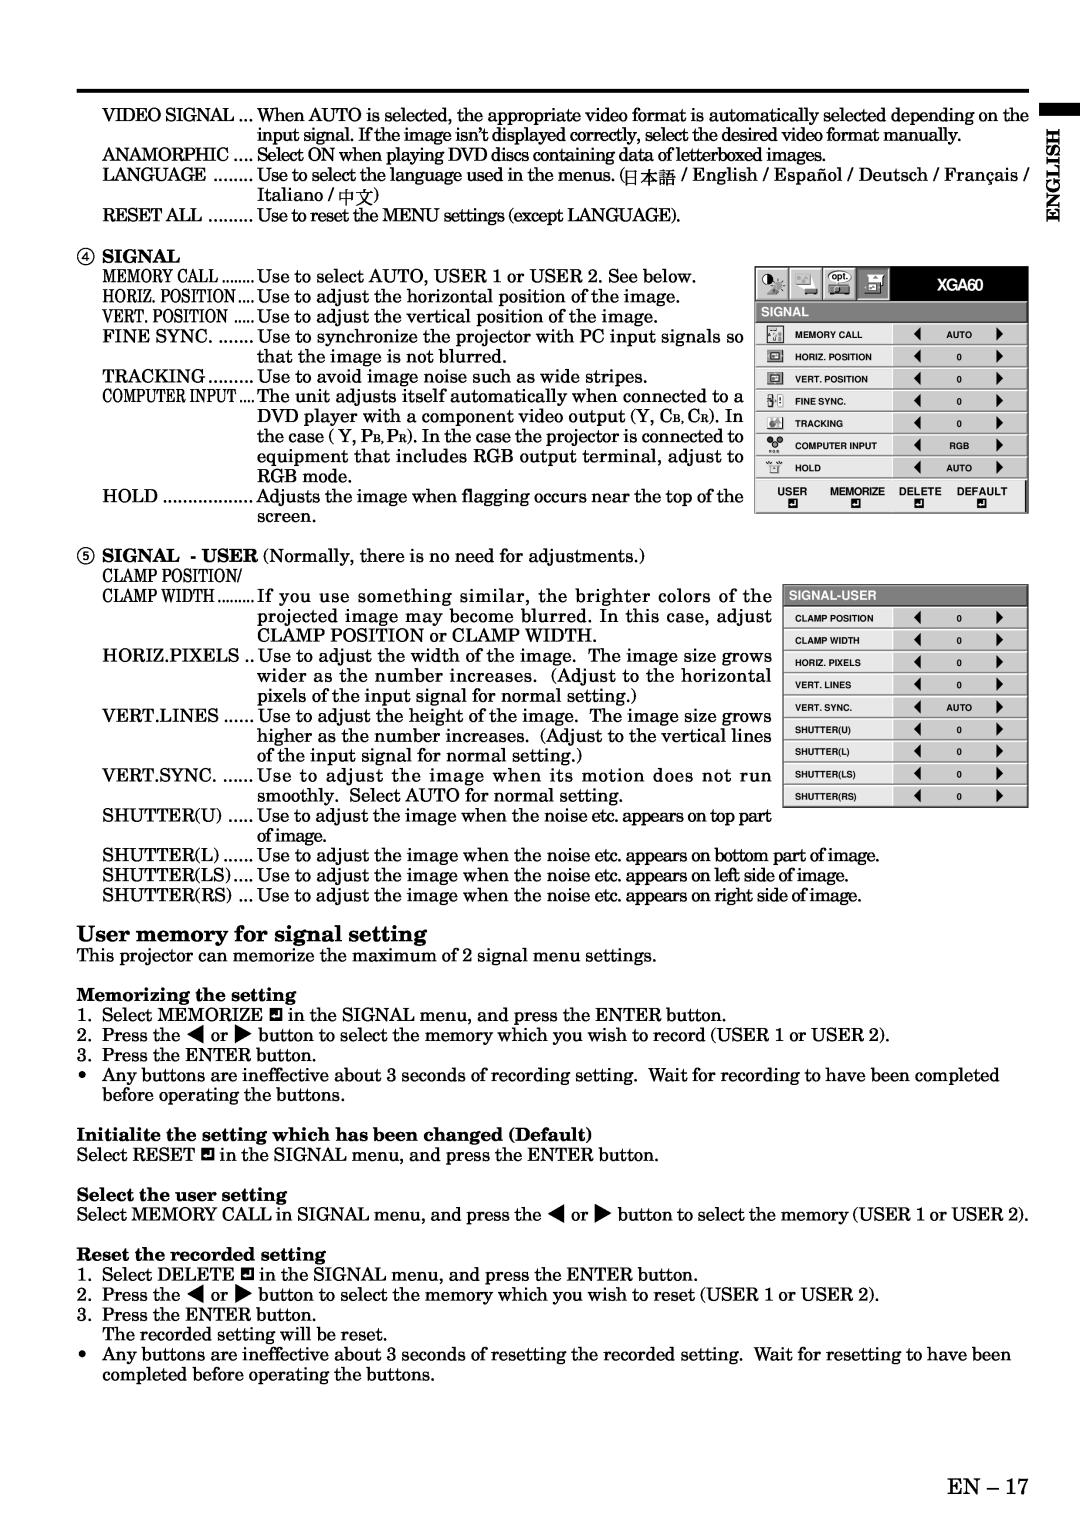 Mitsubishi Electronics XL1U English, Signal, Memorizing the setting, Initialite the setting which has been changed Default 